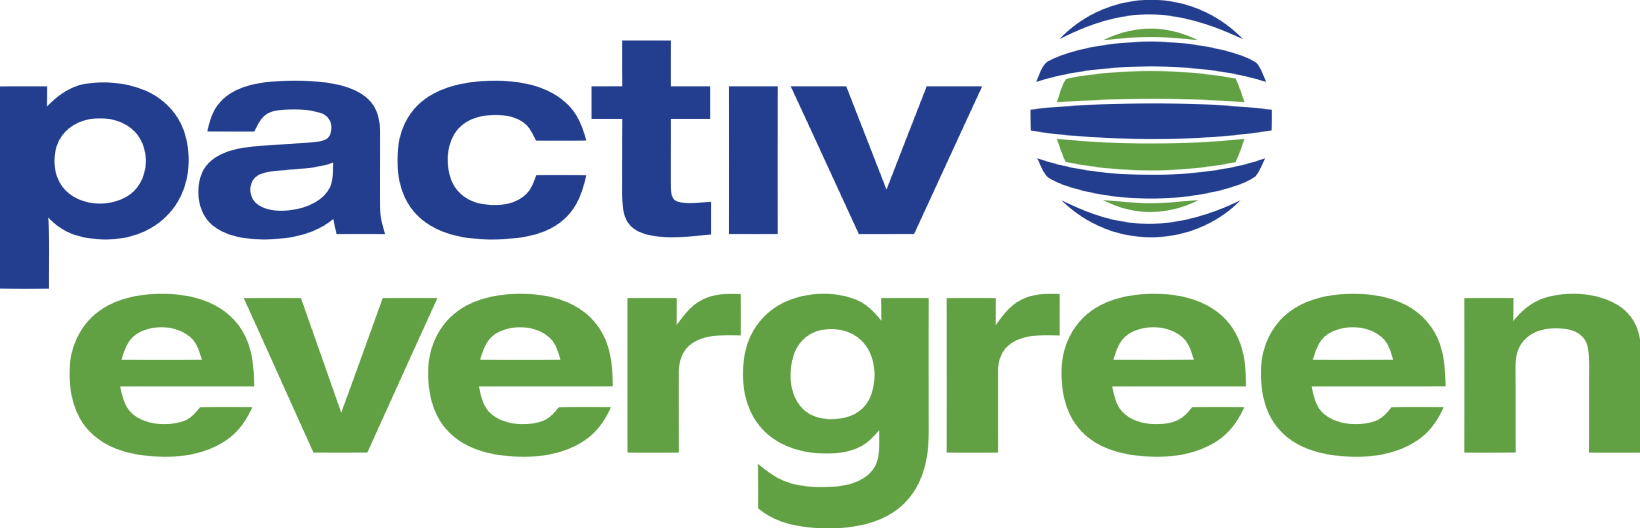 Evergreen Logo | Evergreen Auburn